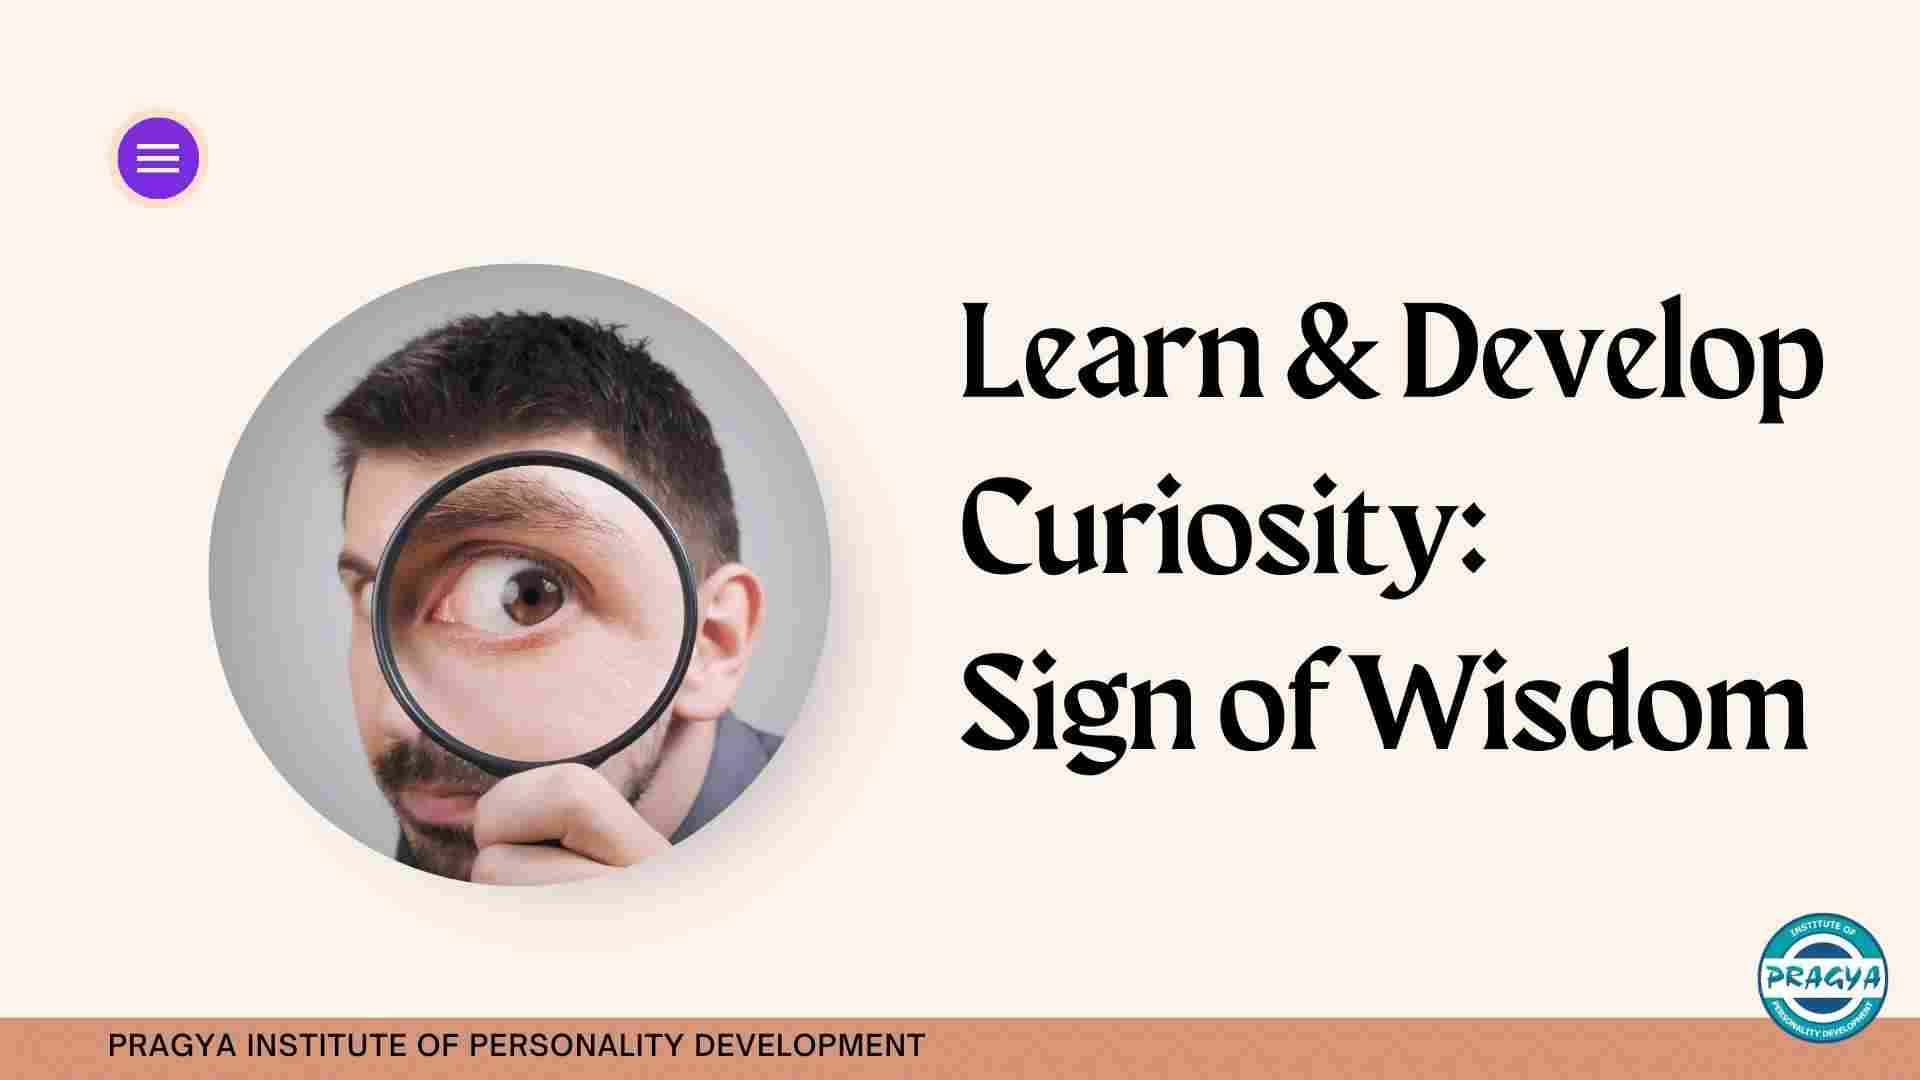 Learn & Develop Curiosity: Sign of Wisdom